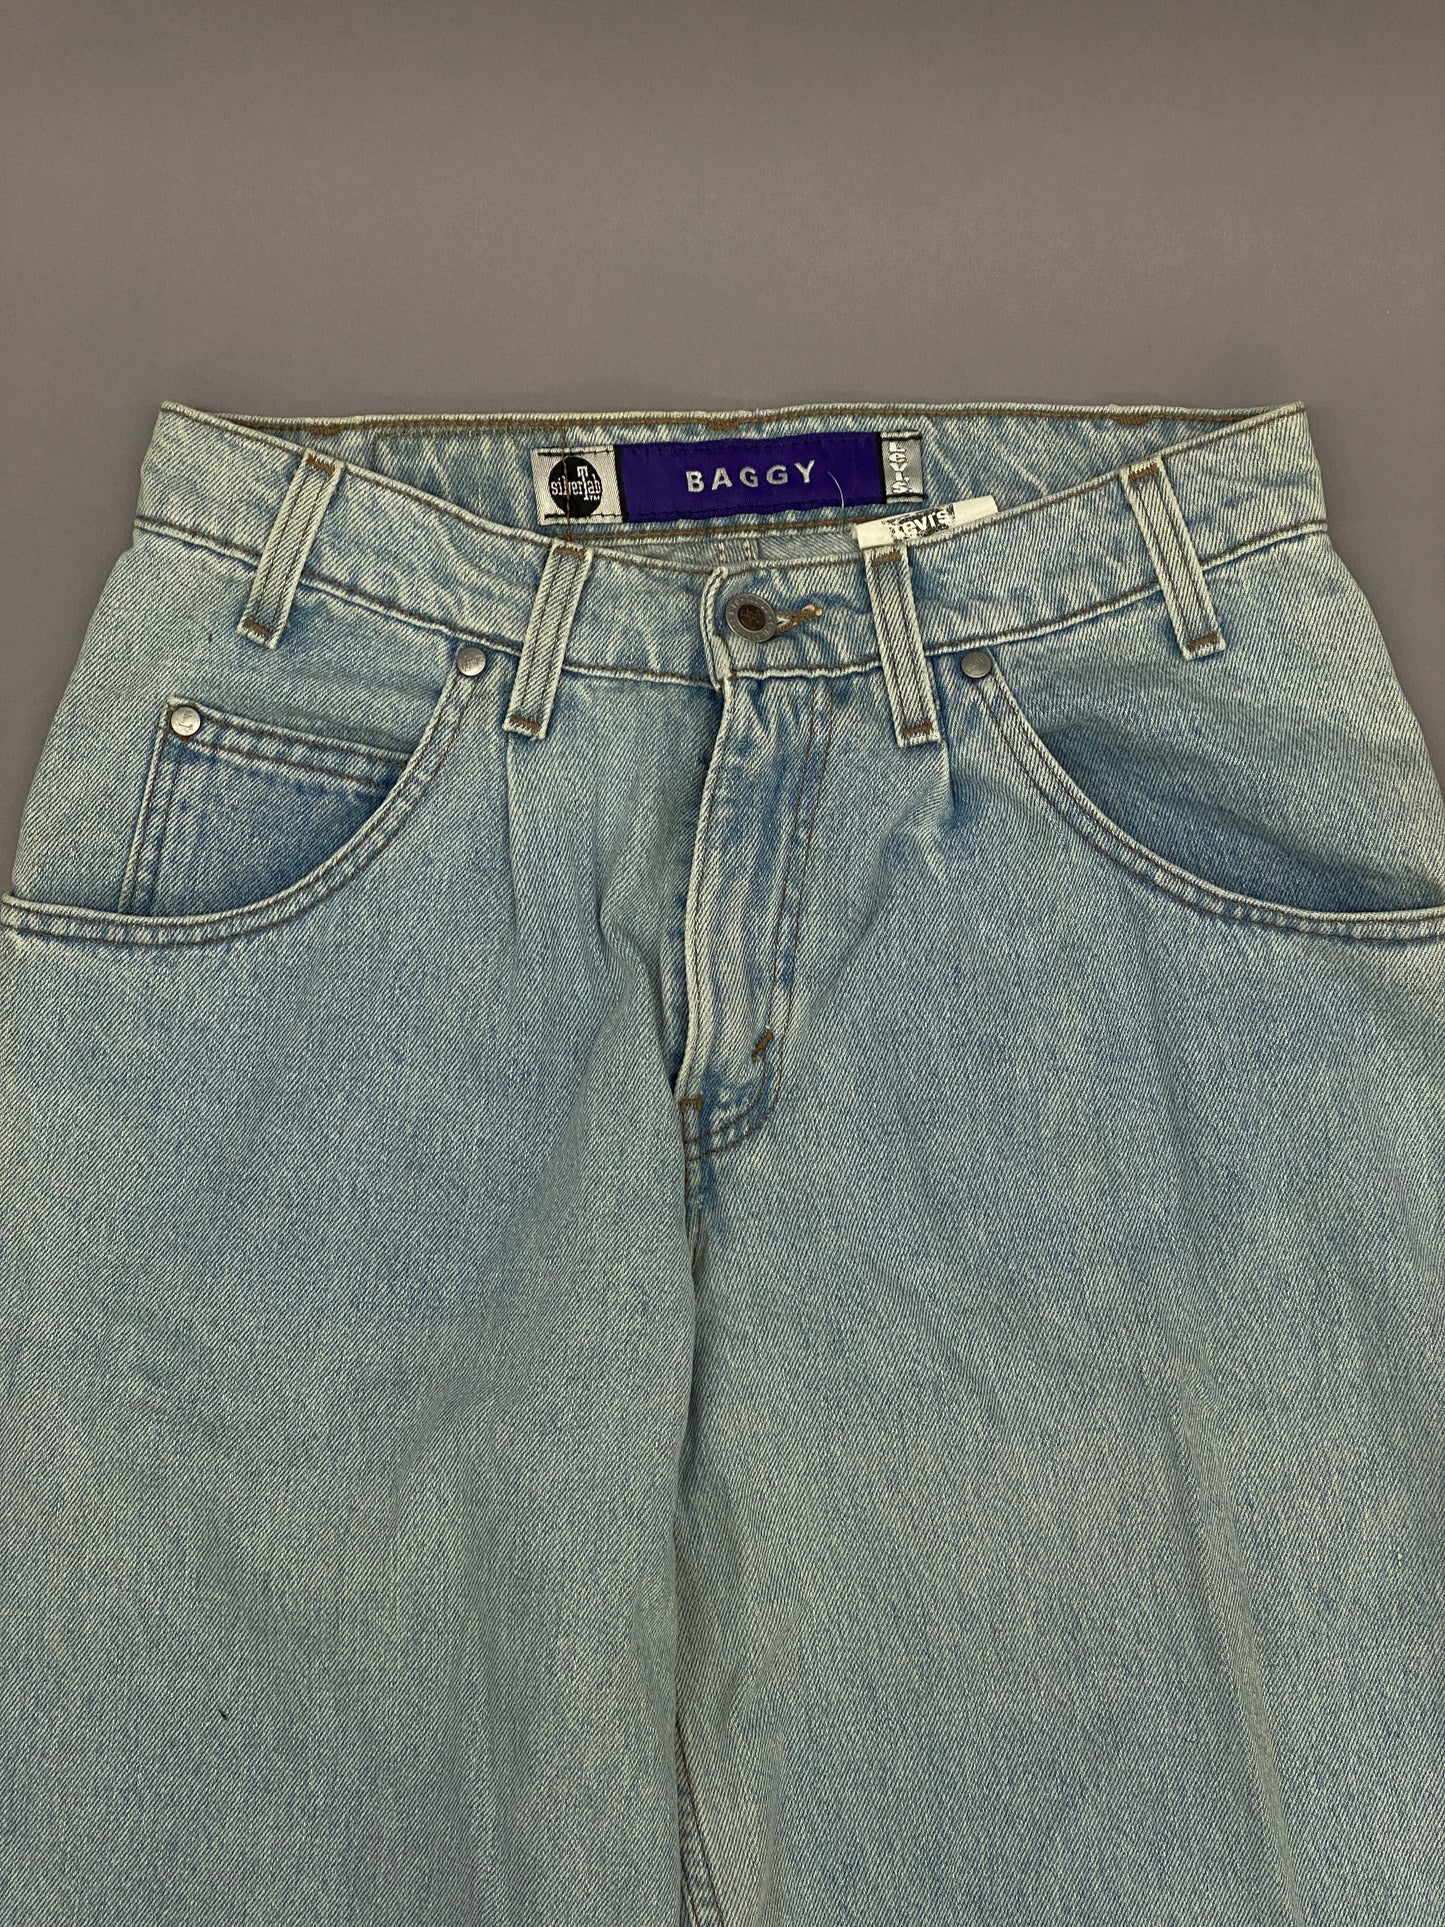 Levis Silvertab Vintage Baggy Jeans - 28x32